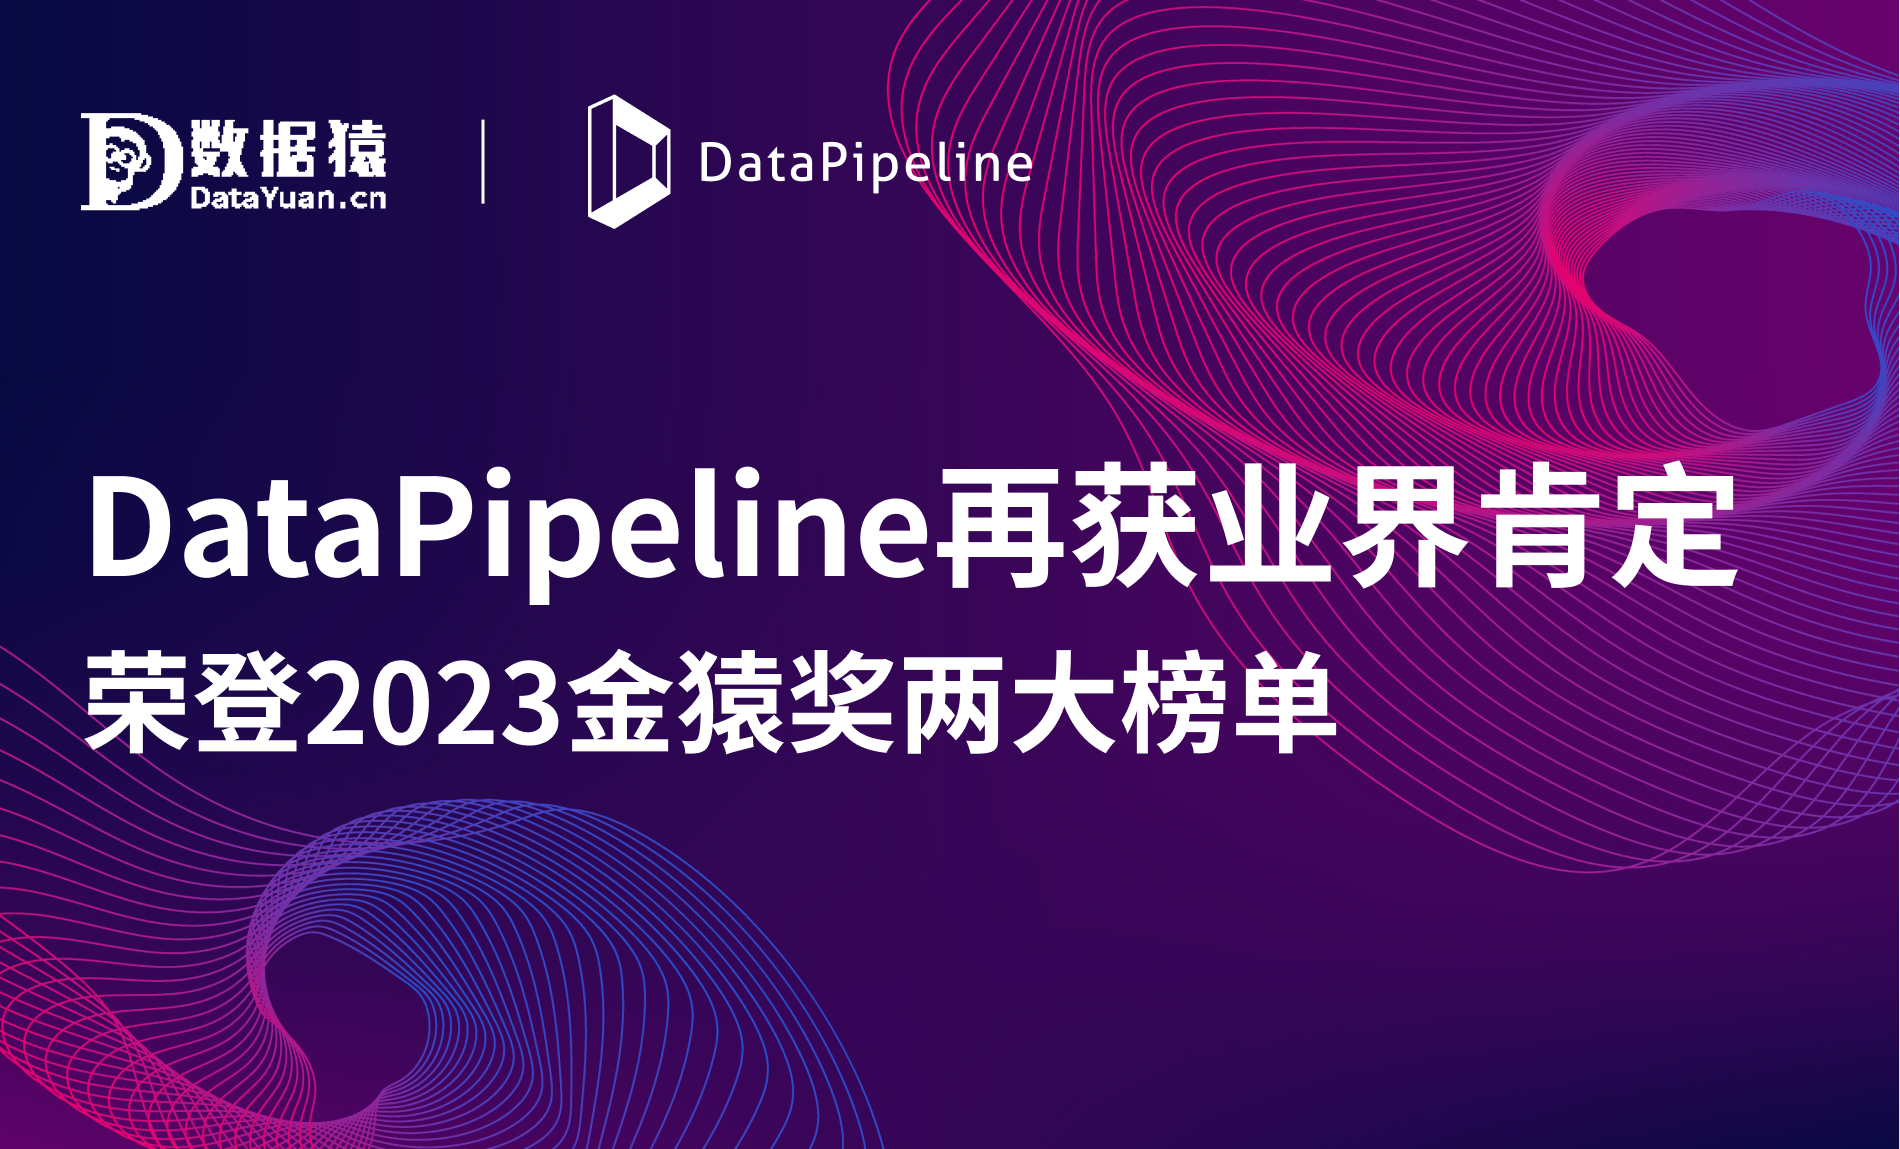 DataPipeline 再获业界肯定，荣登2023金猿奖两大榜单